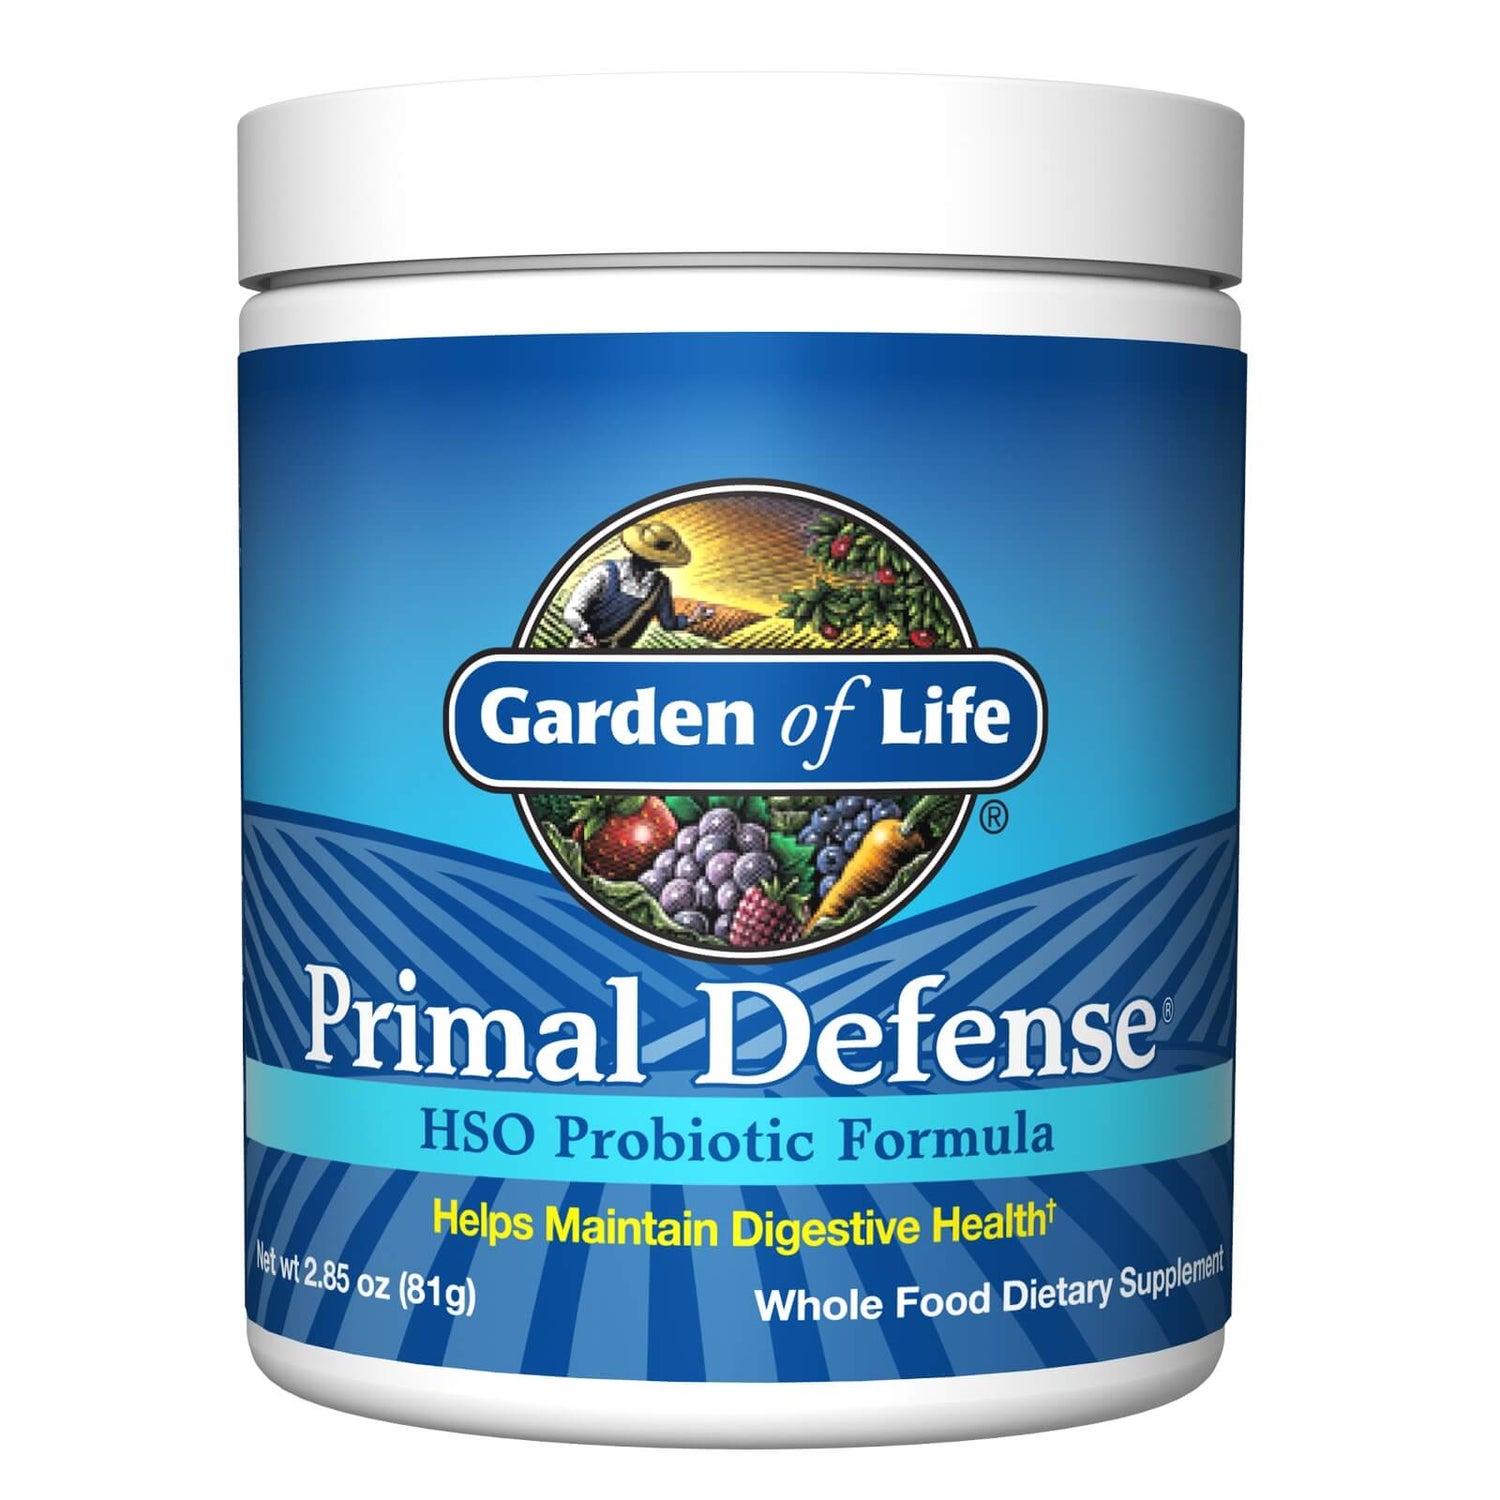 Garden of Life Primal Defense HSO Formula - 81g